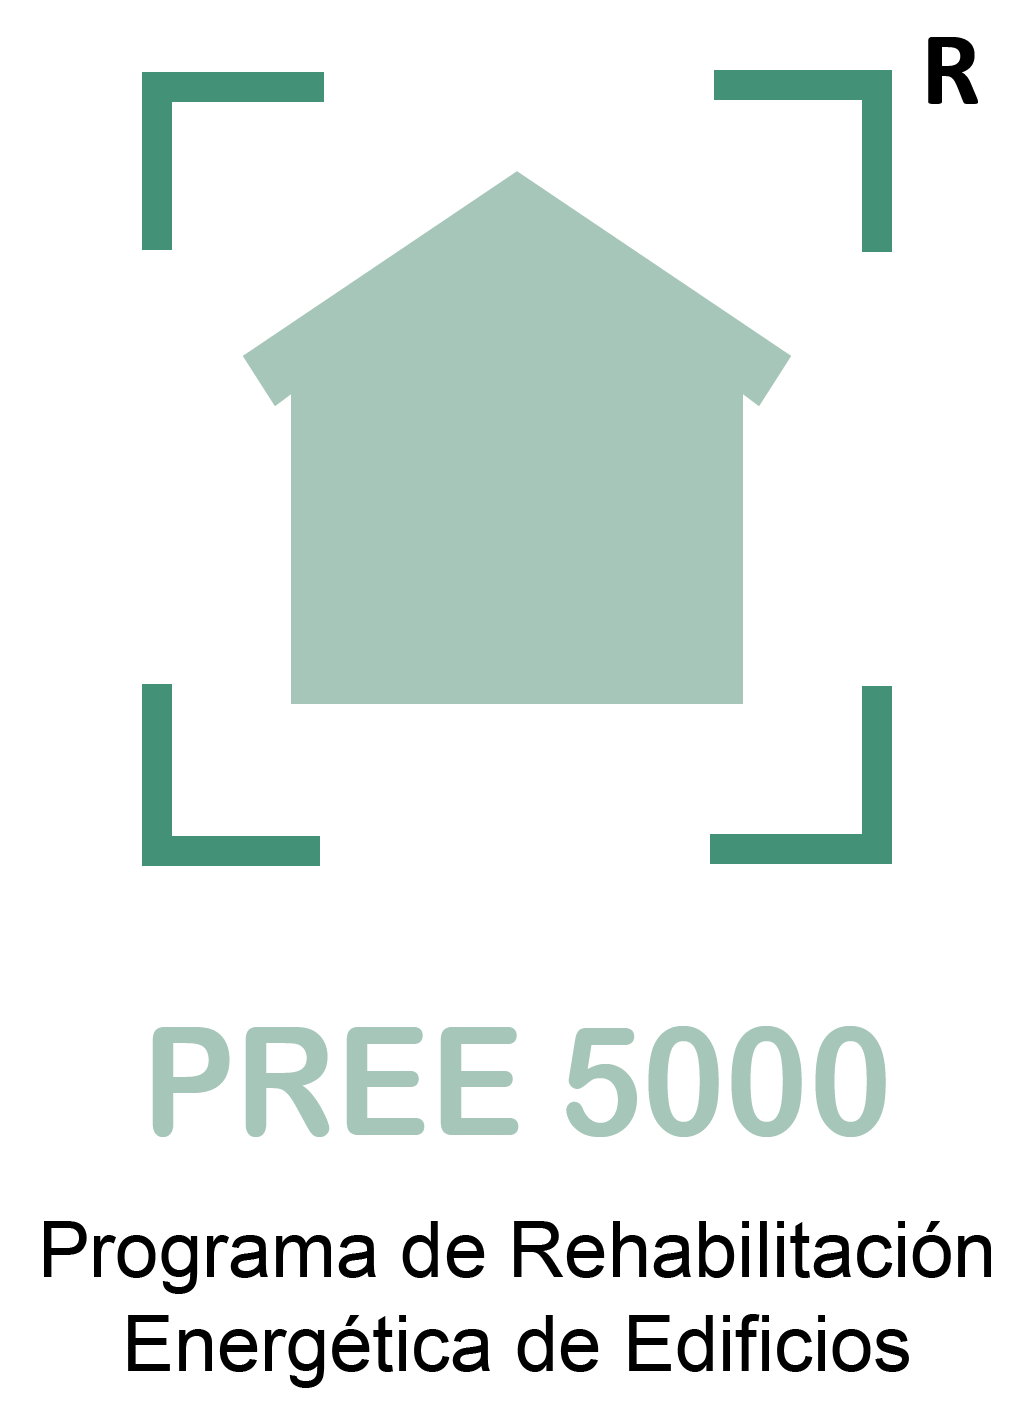 PREE 5000